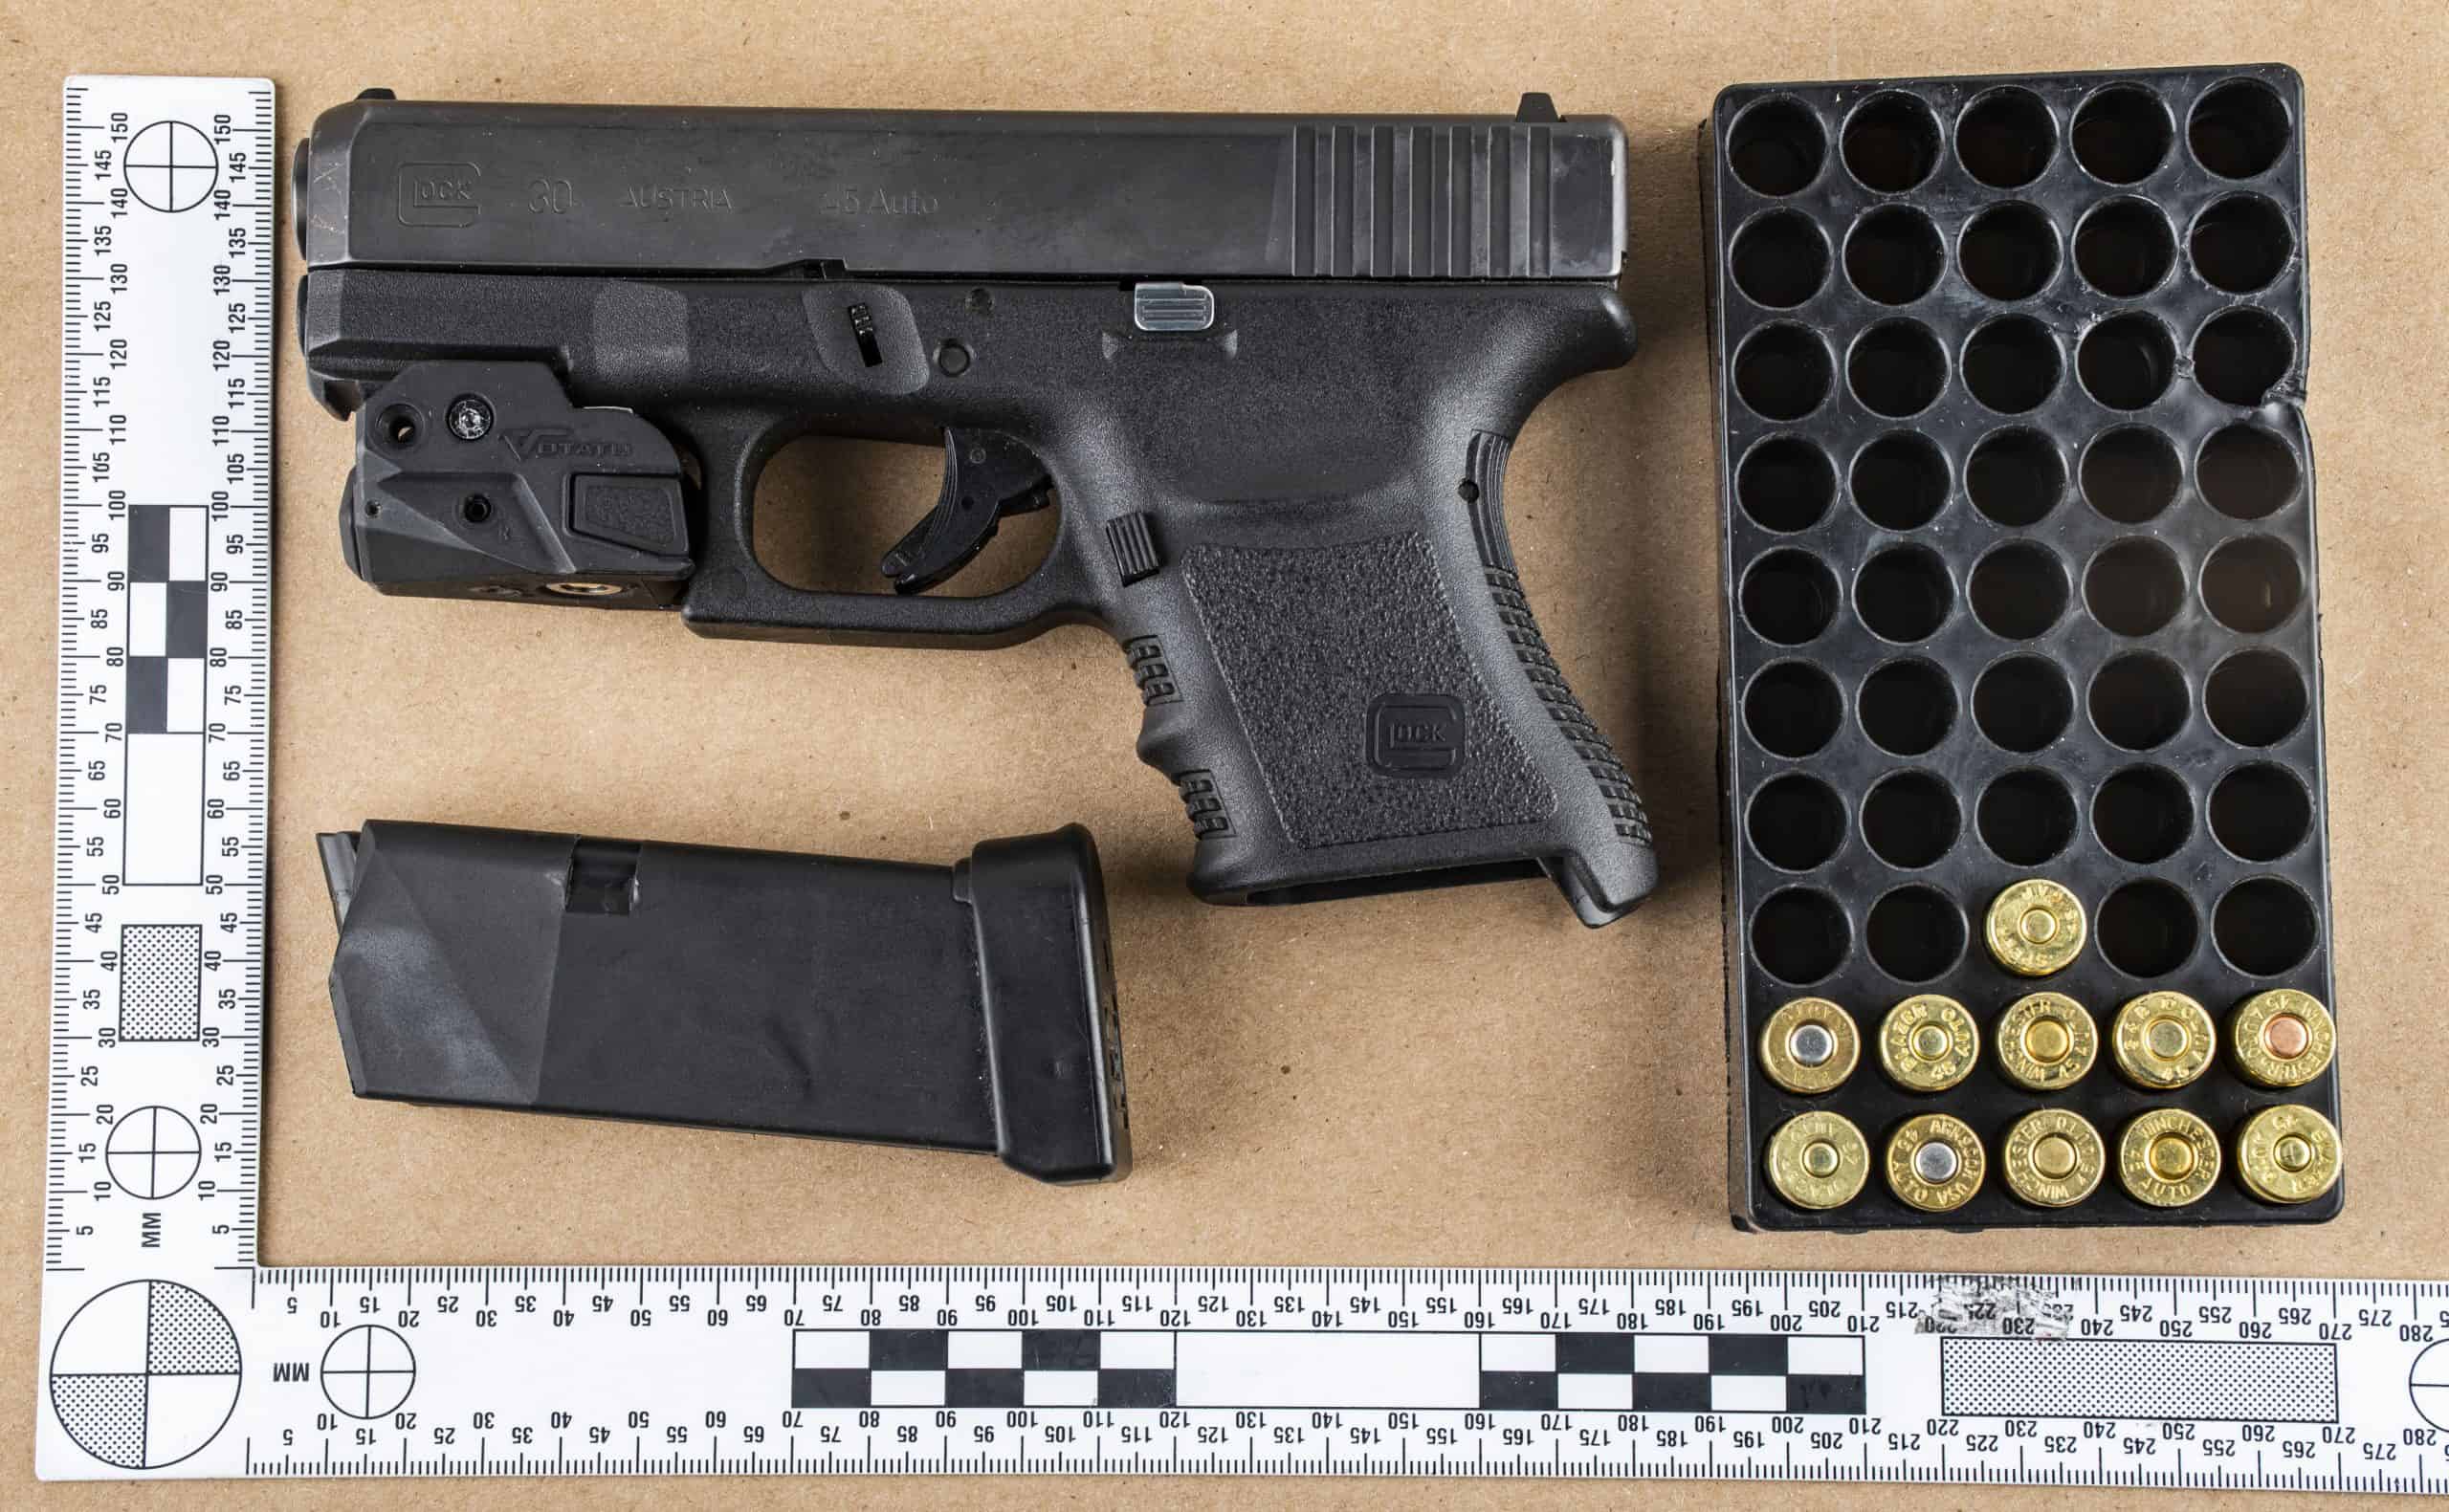 Man on 10-year gun ban charged after loaded handgun found in Brampton: police